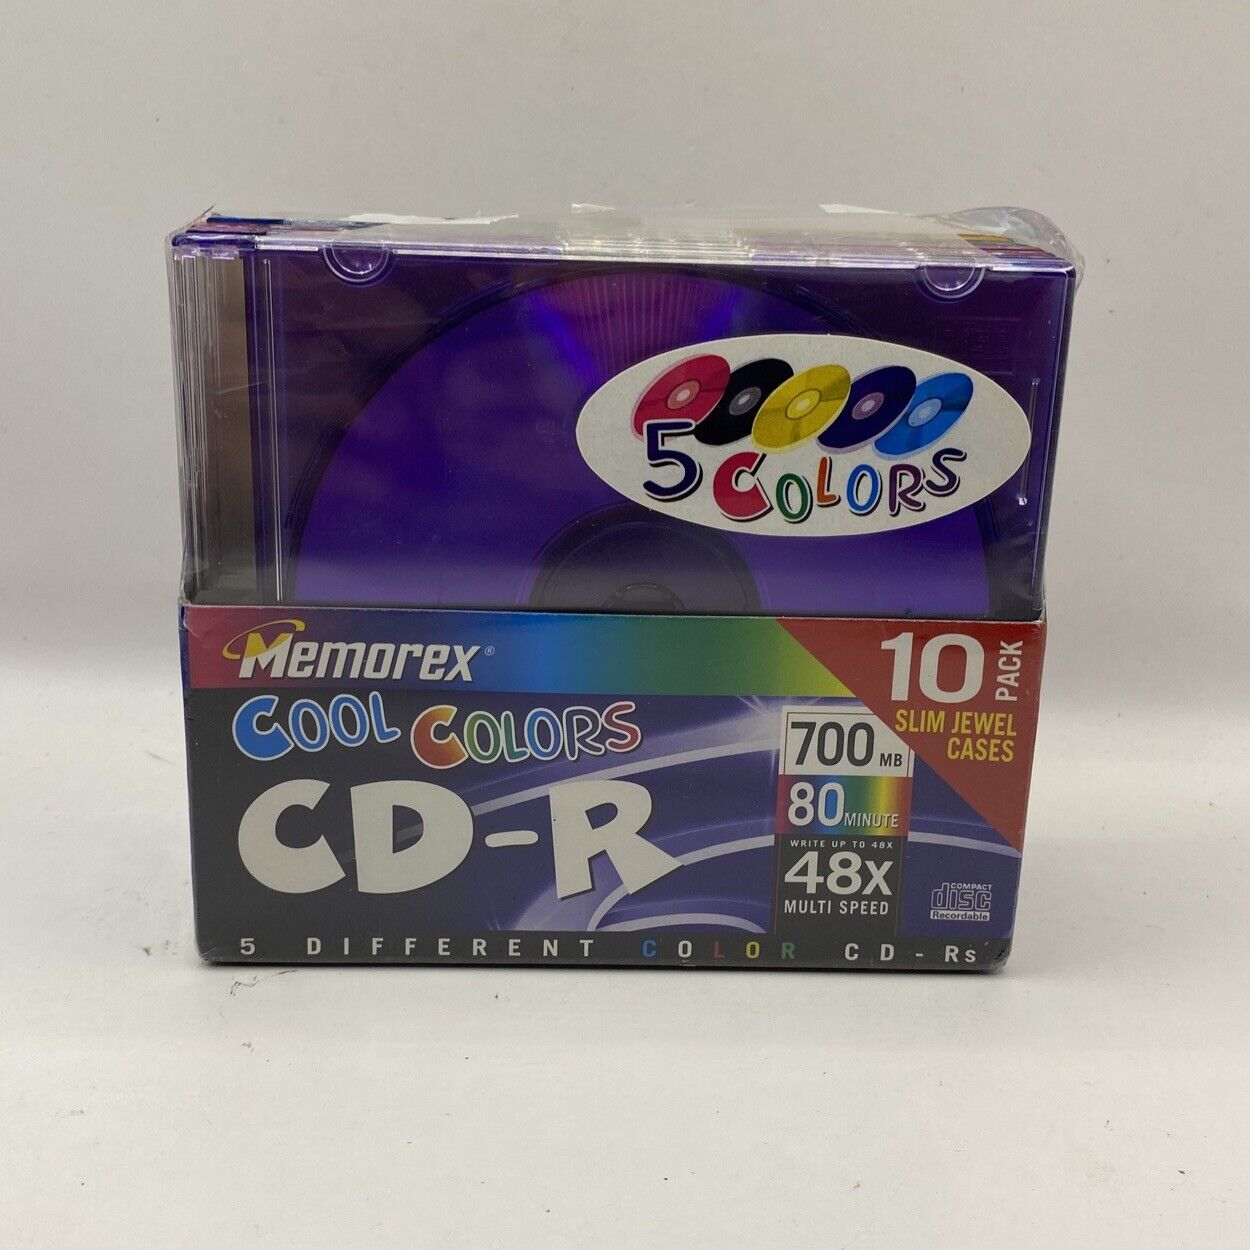 Memorex CD-R 10-Pack Cool Colors 48X 700MB 80 min New Sealed